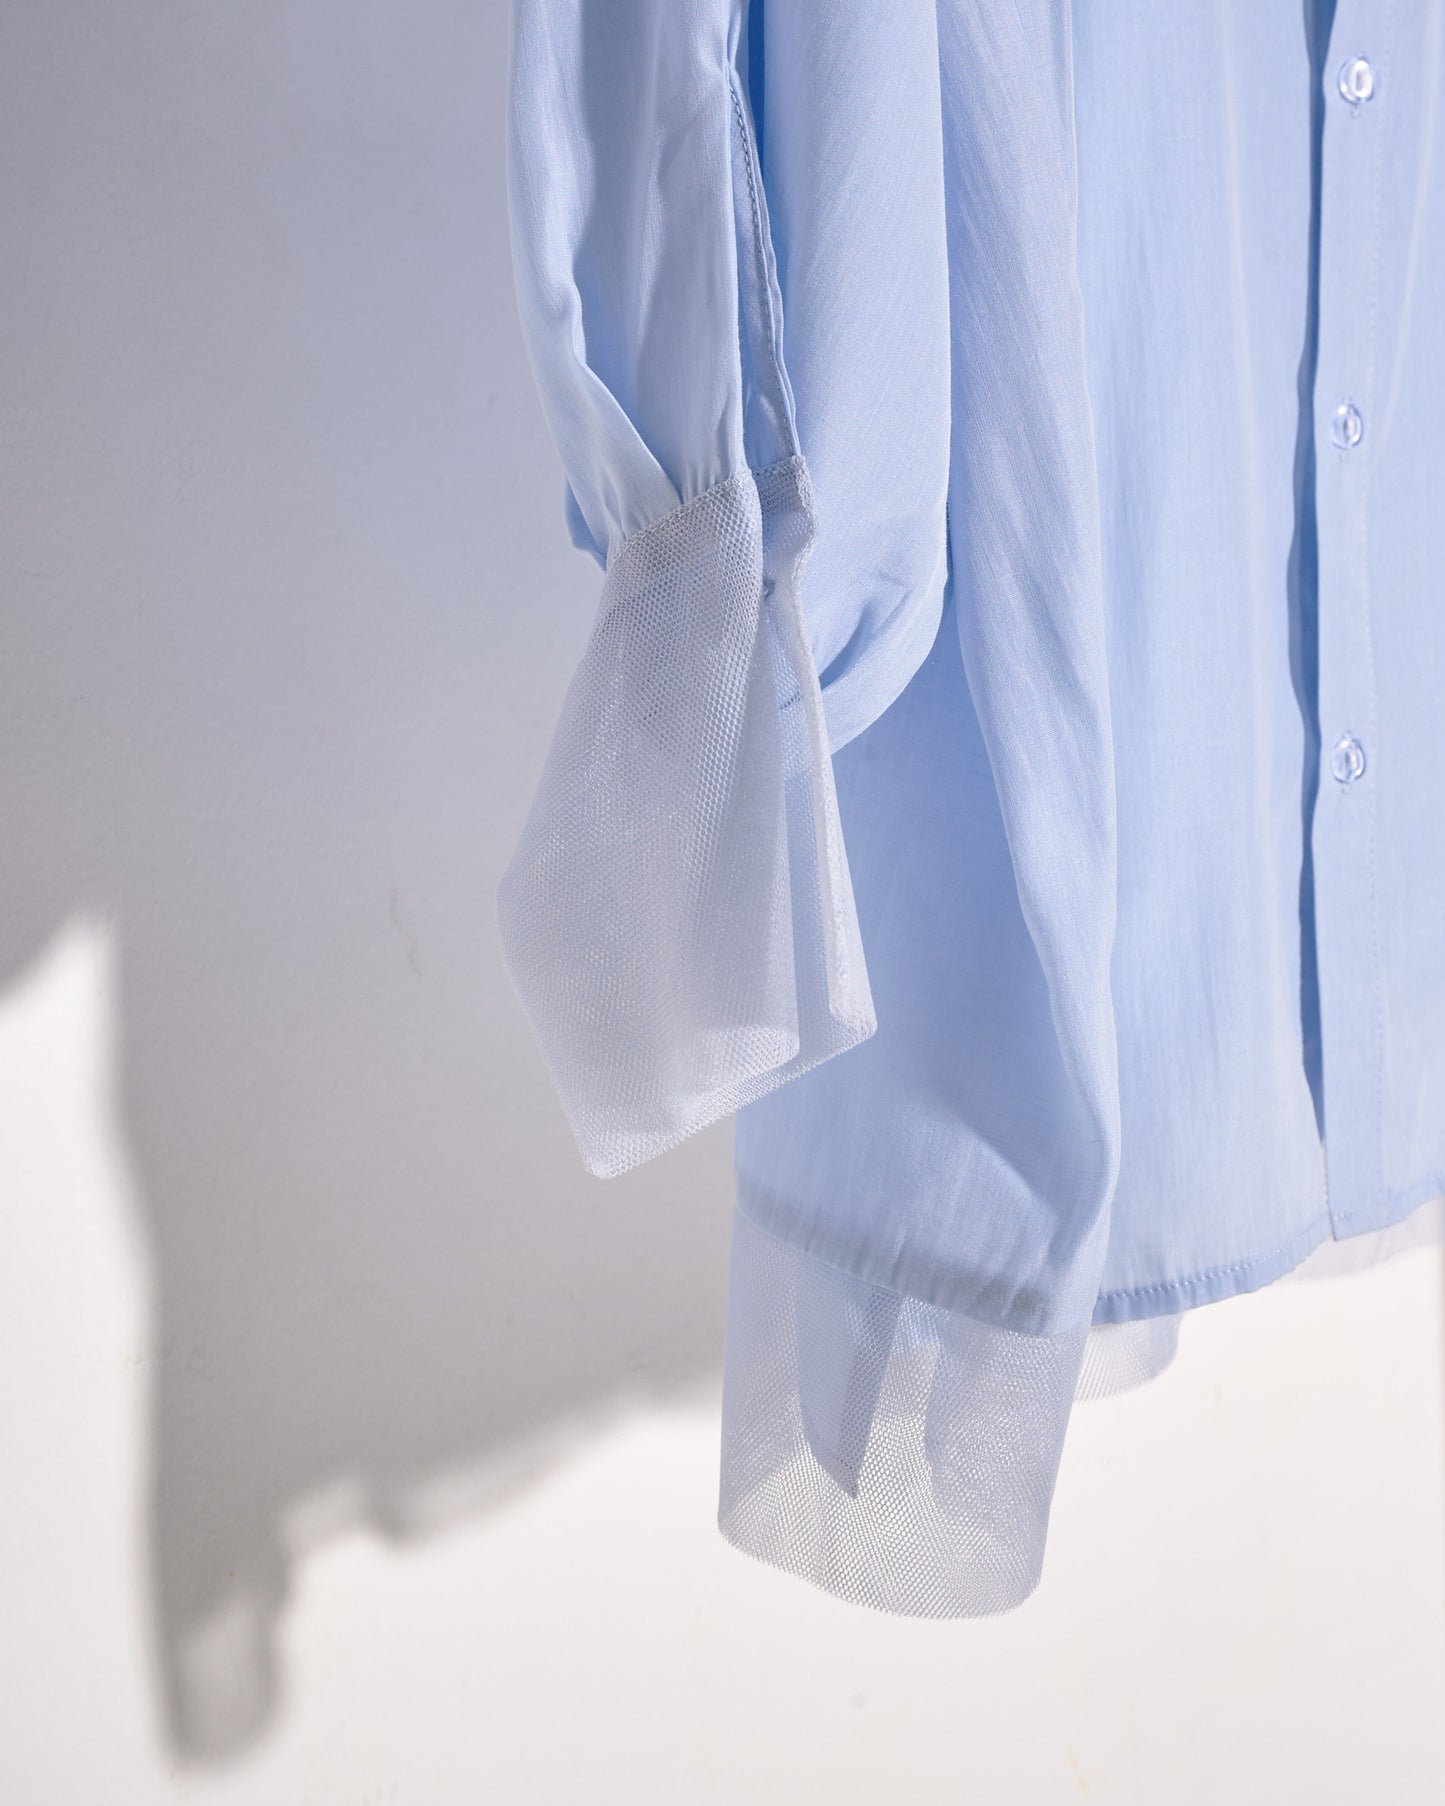 aalis TYLER balloon sleeves oversized shirt with mesh detail (Light blue)